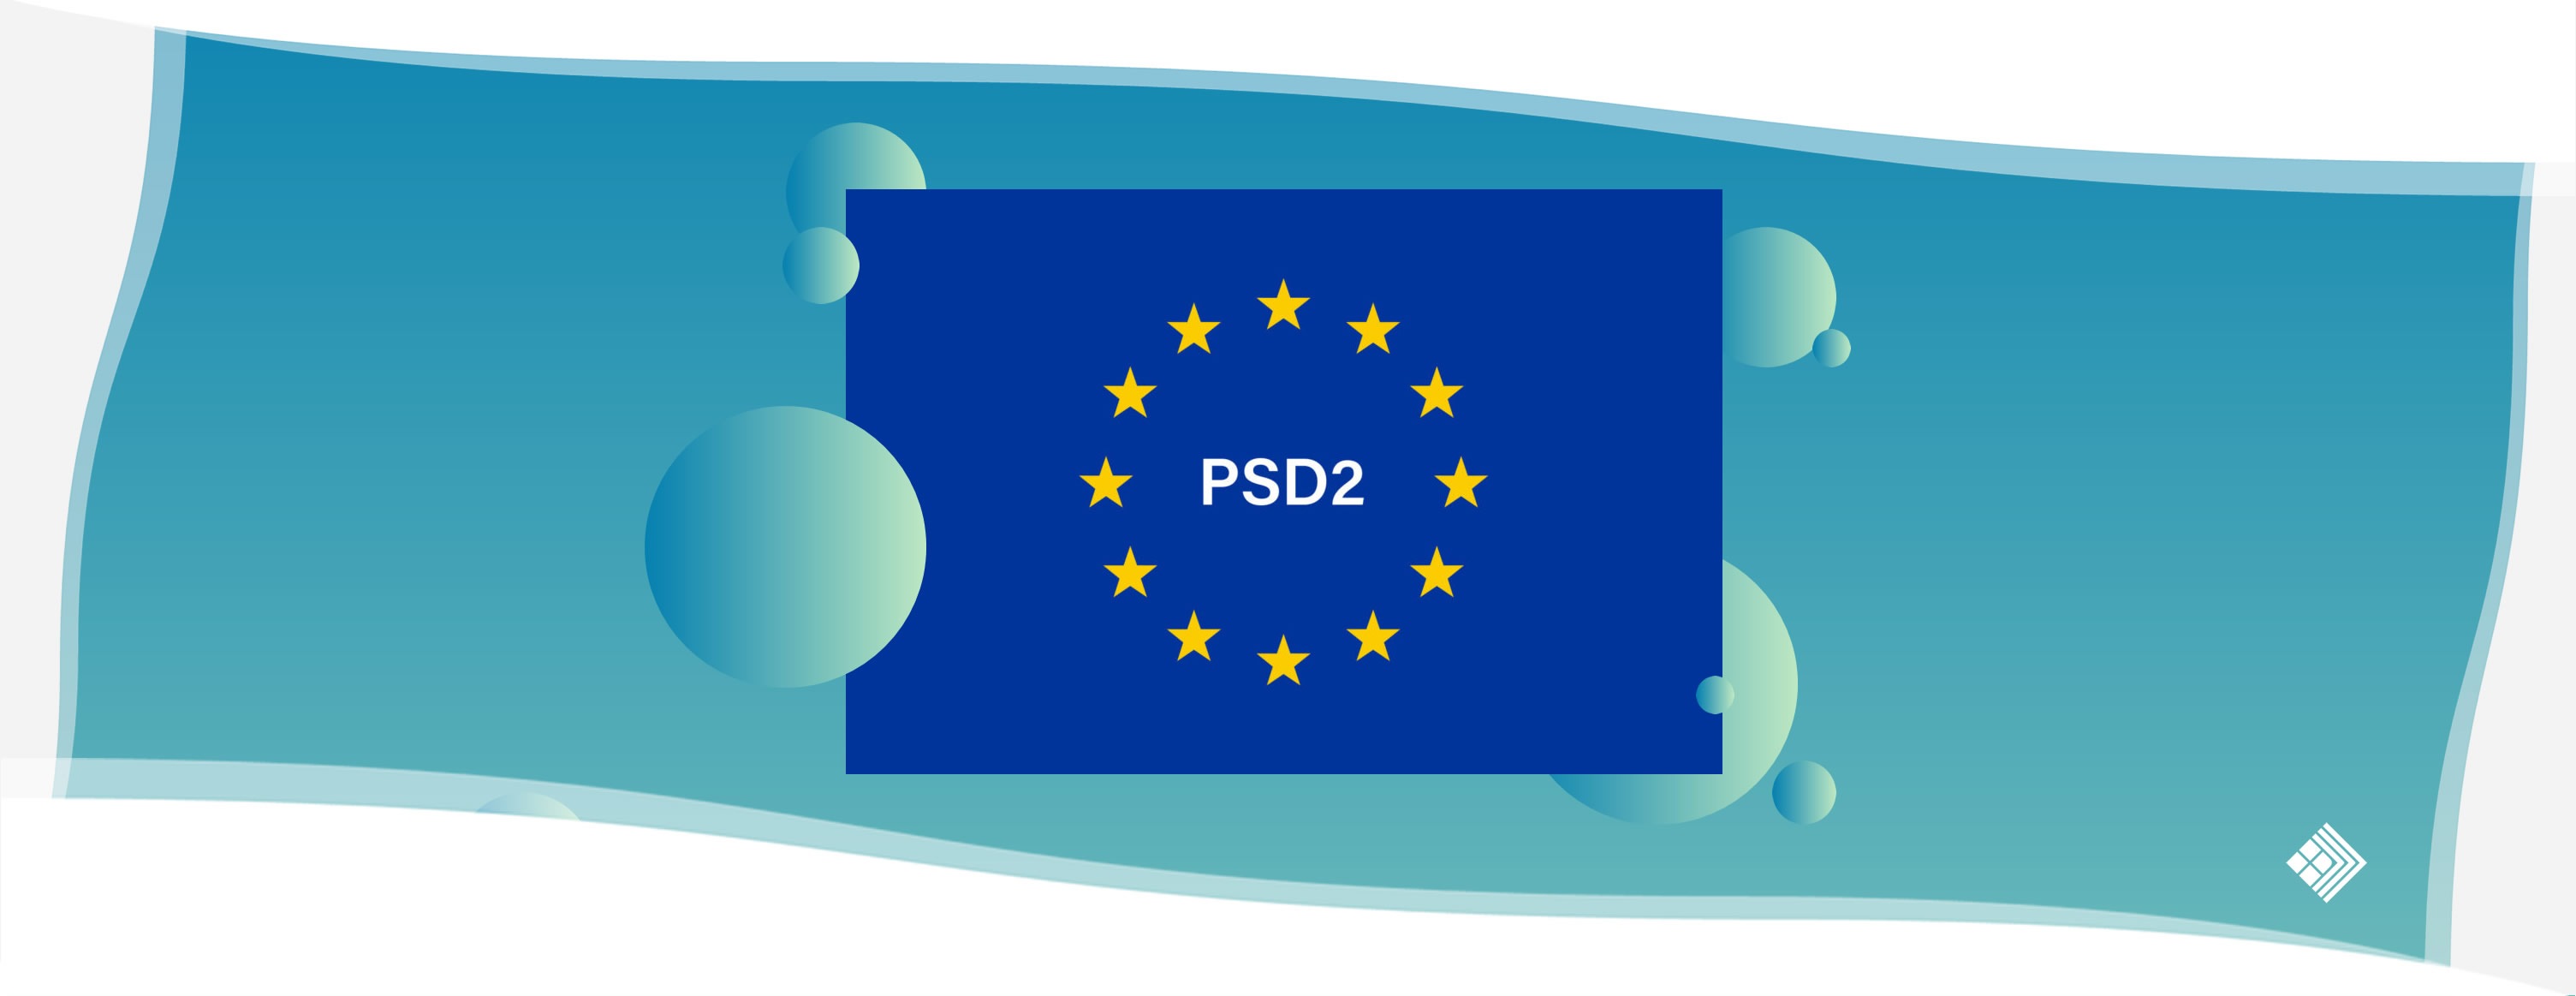 PSD2 - Payment Services Directive 2 CADIT